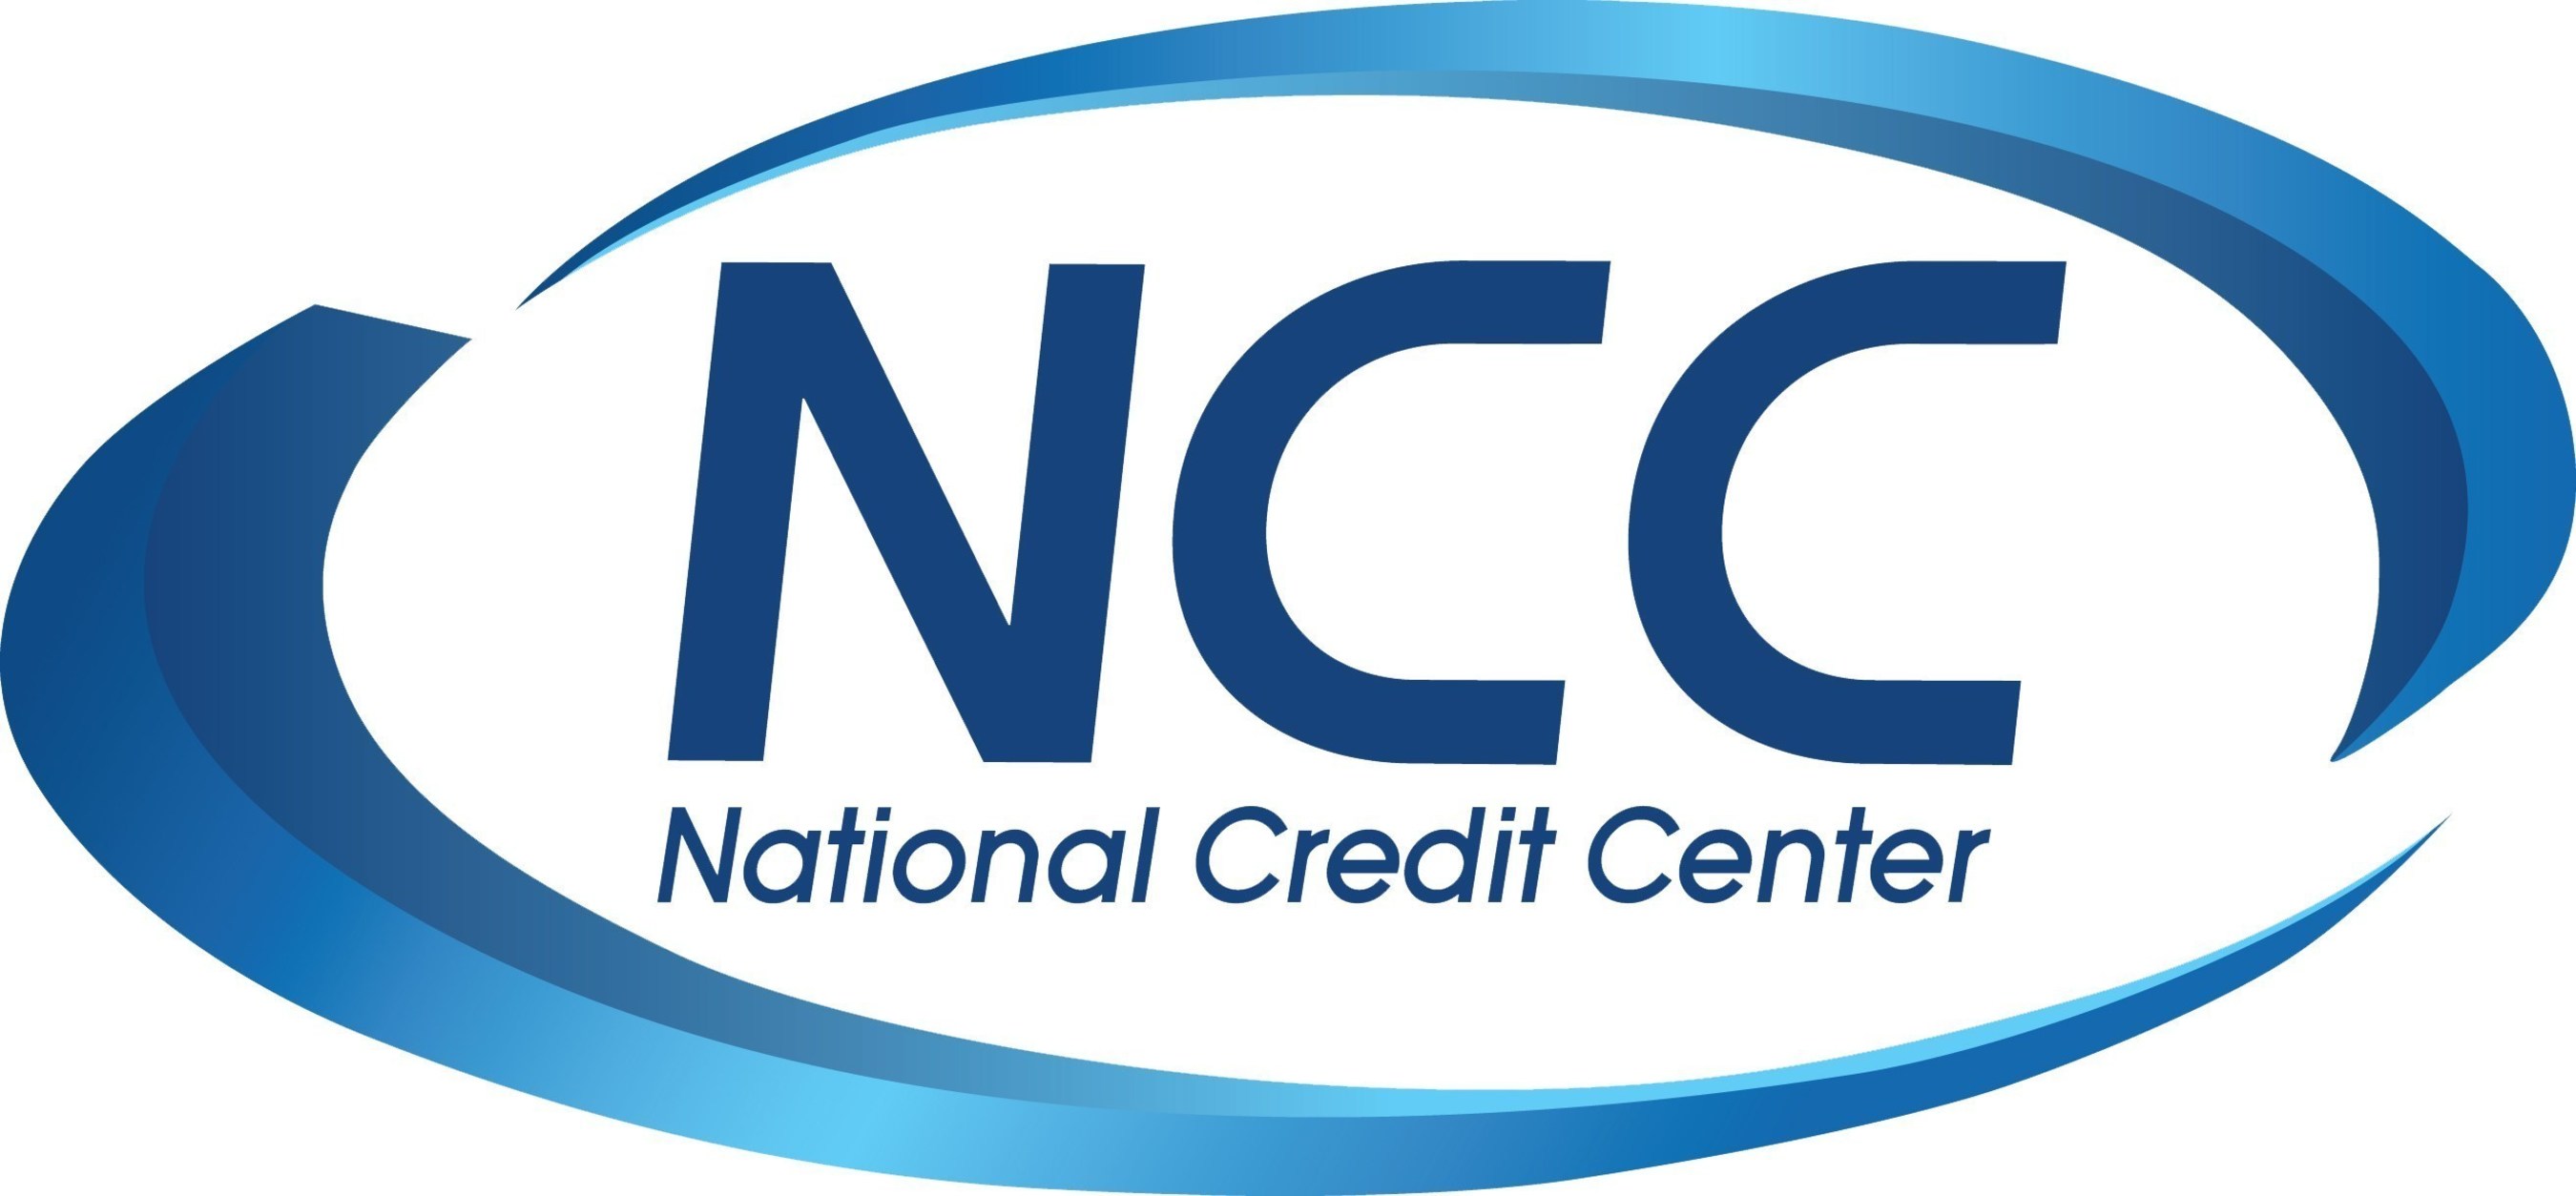 National Credit Center Launches Avendas CRM